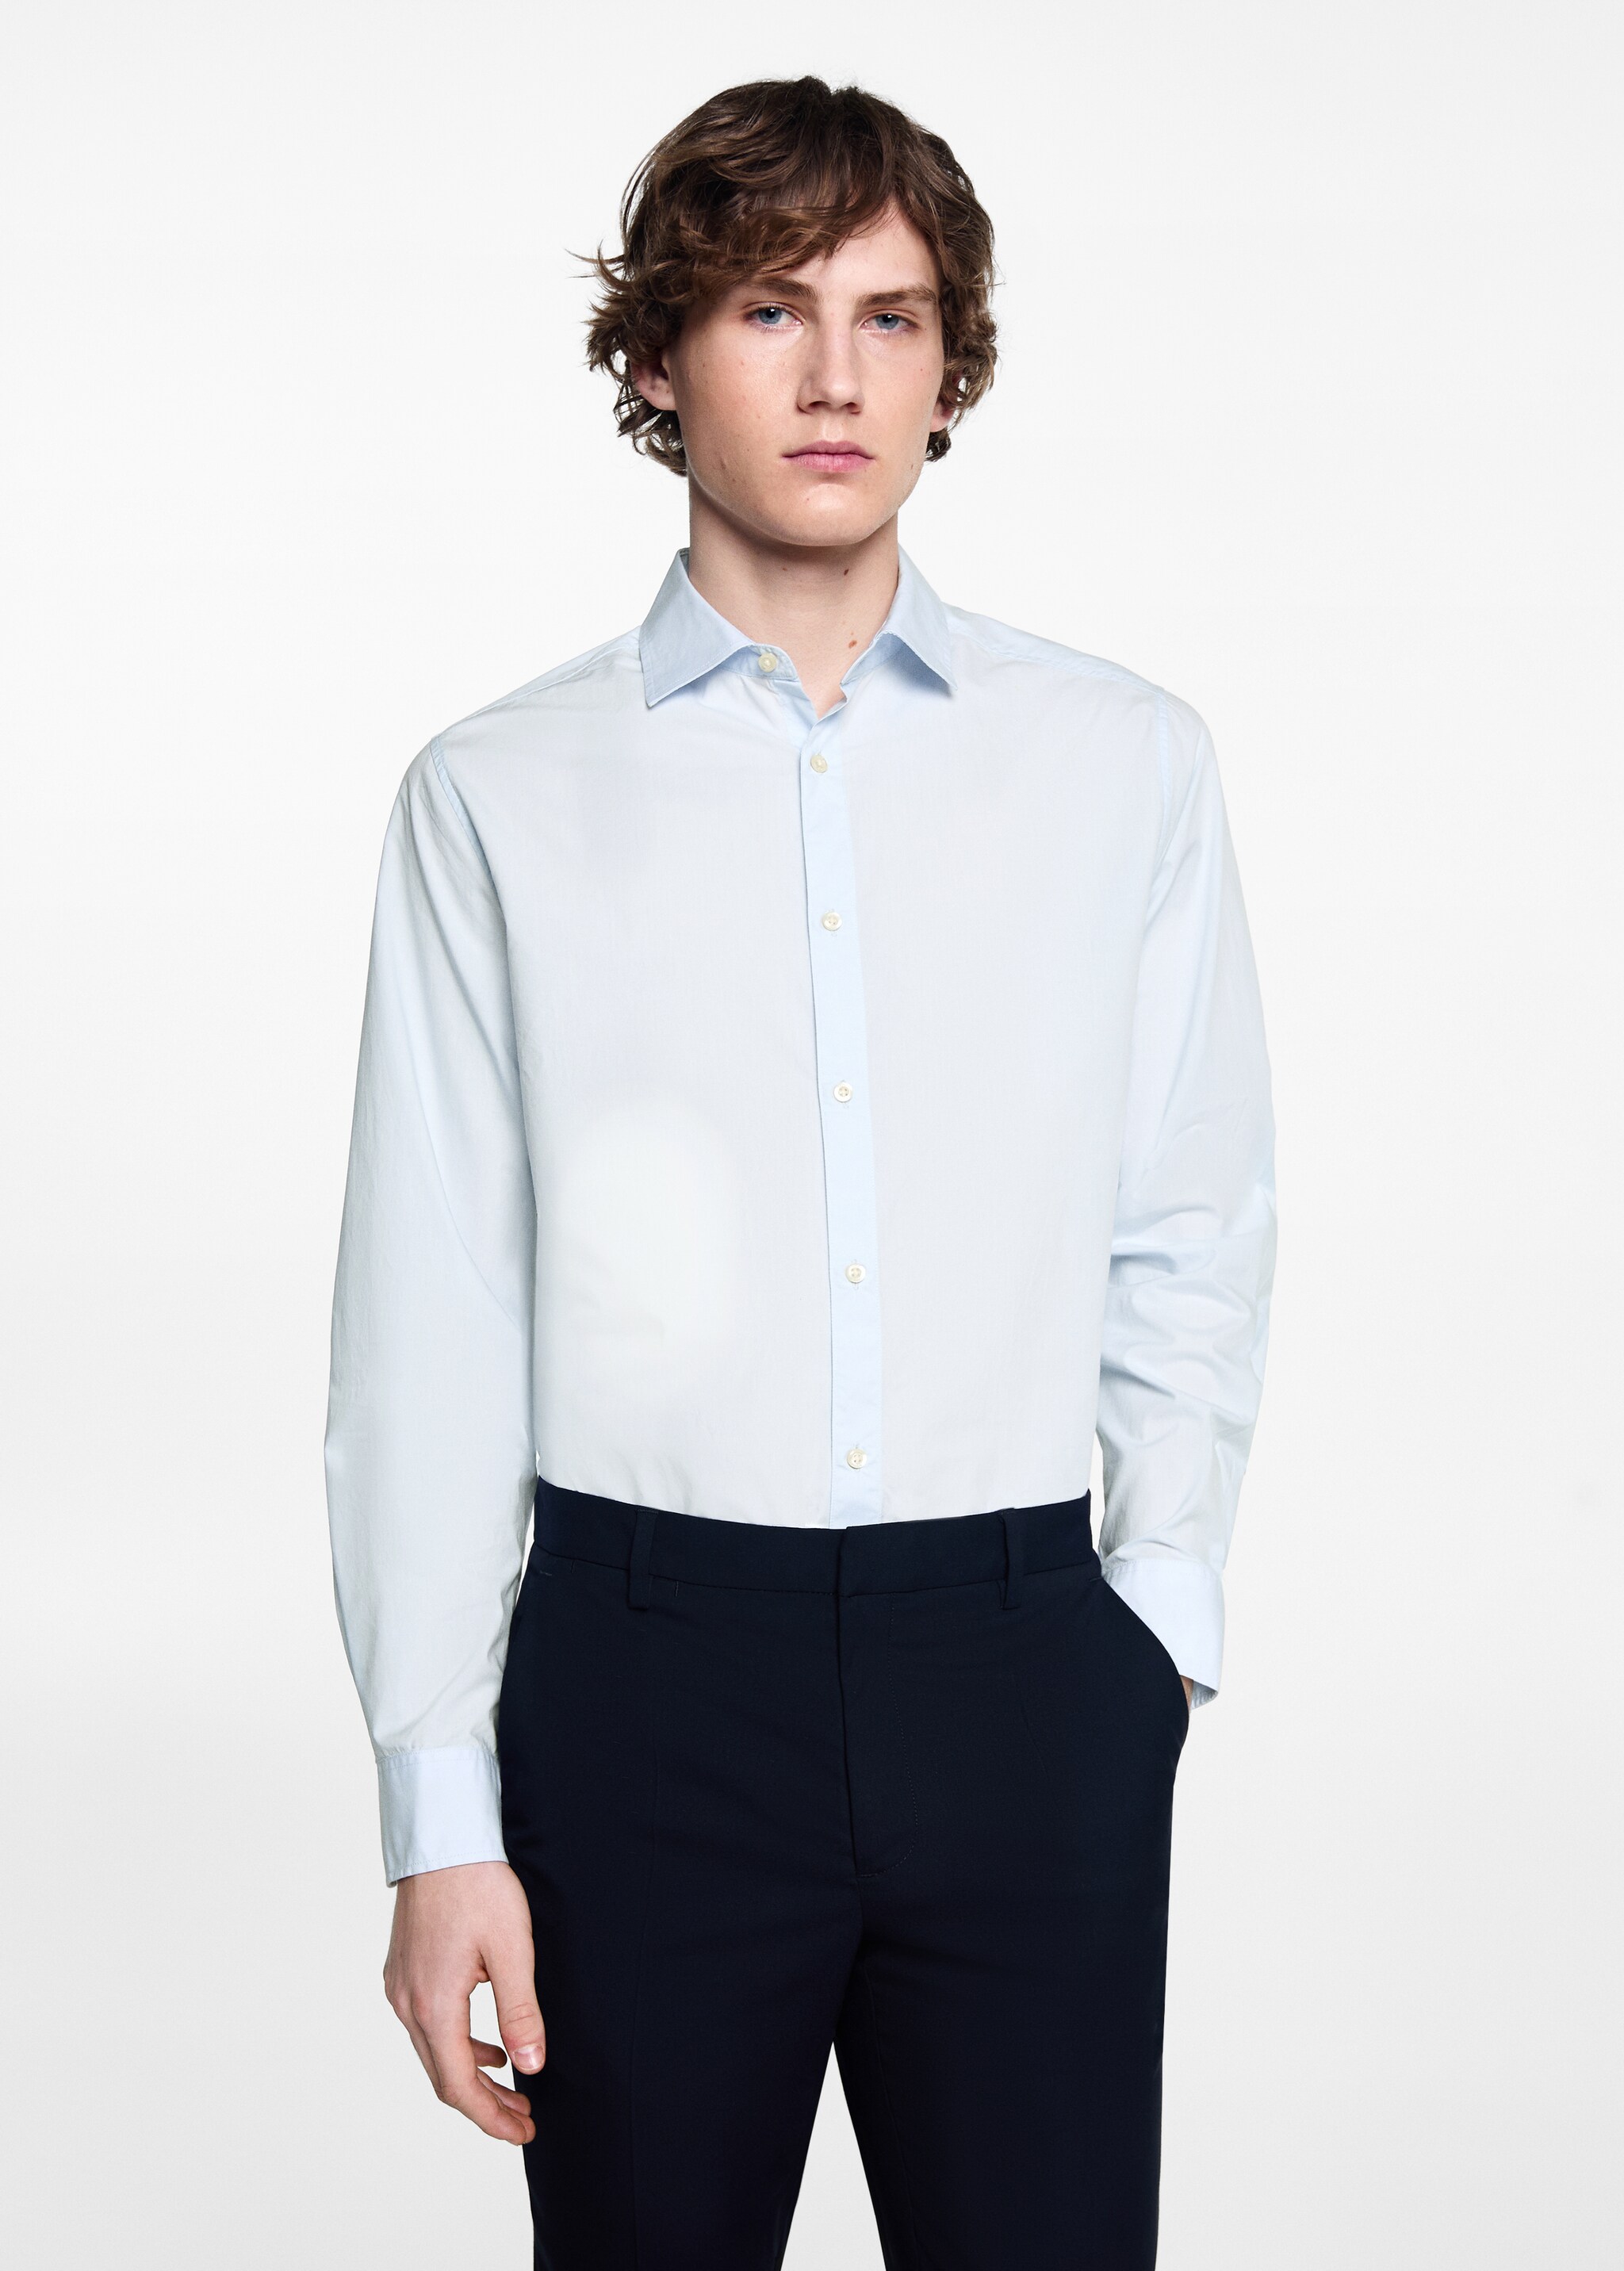 Oxford cotton shirt - Medium plane